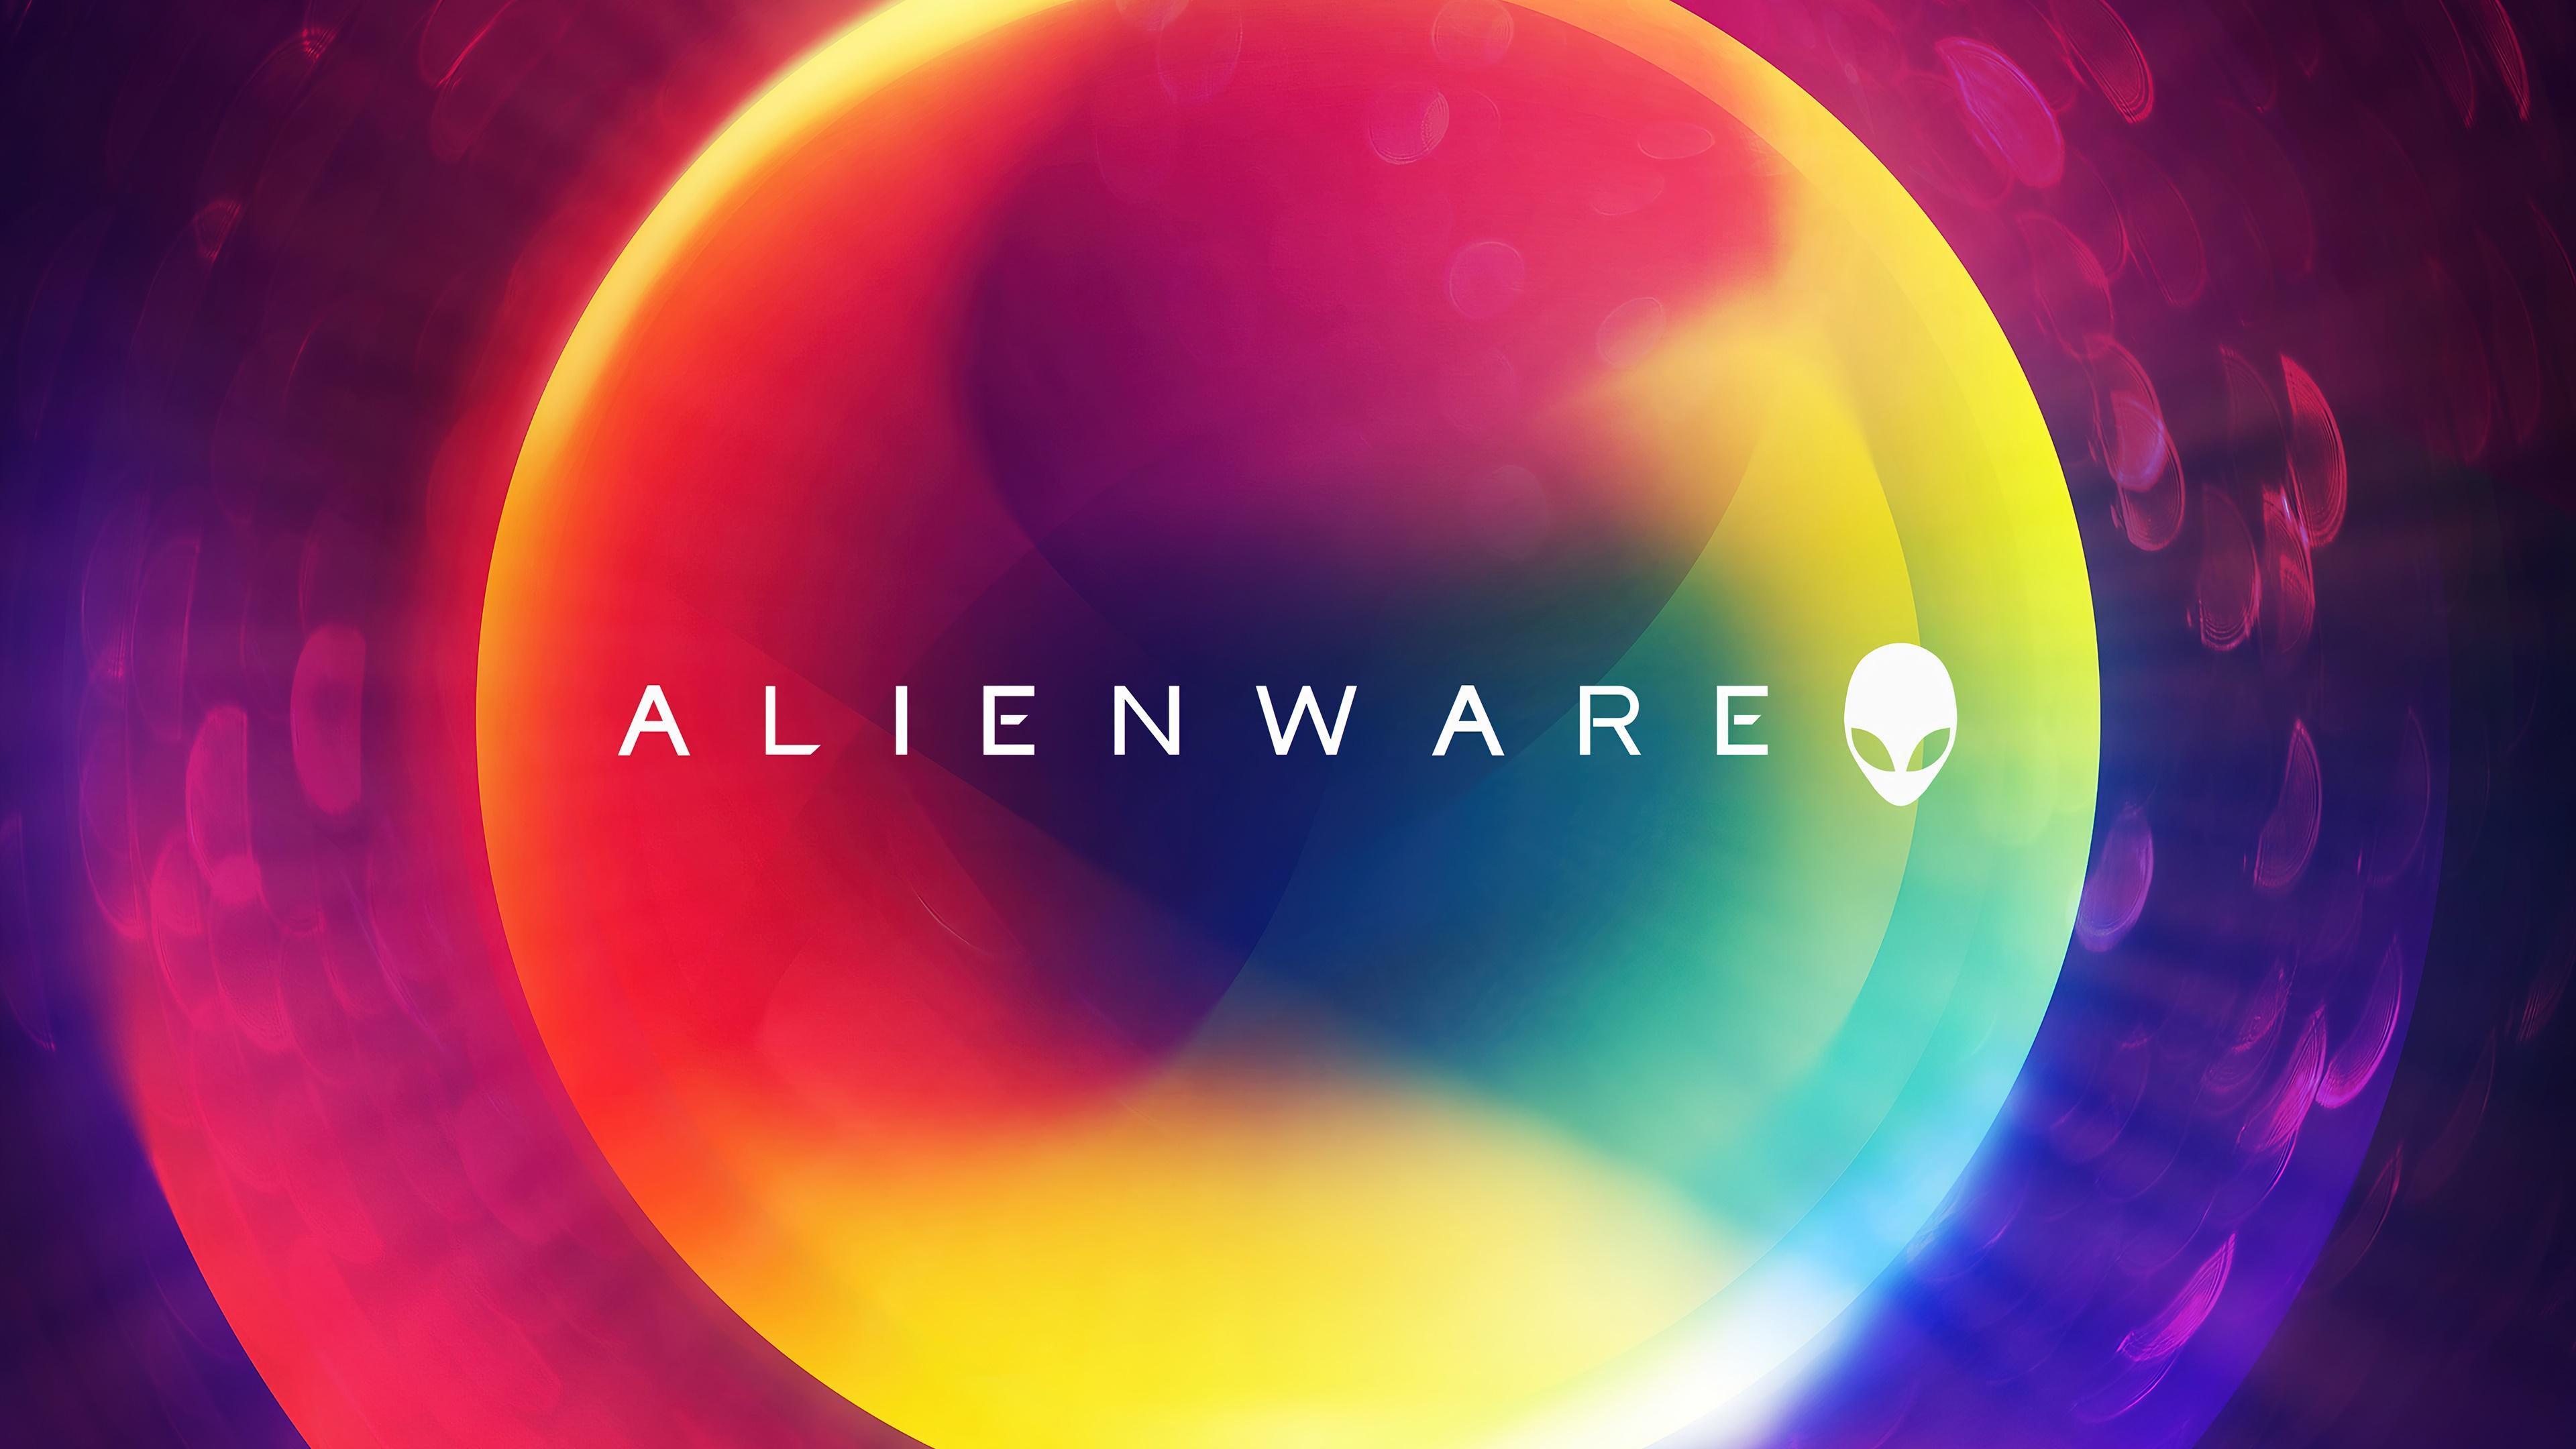 HD wallpaper, Logo, Alienware, 4K, Background, Colorful